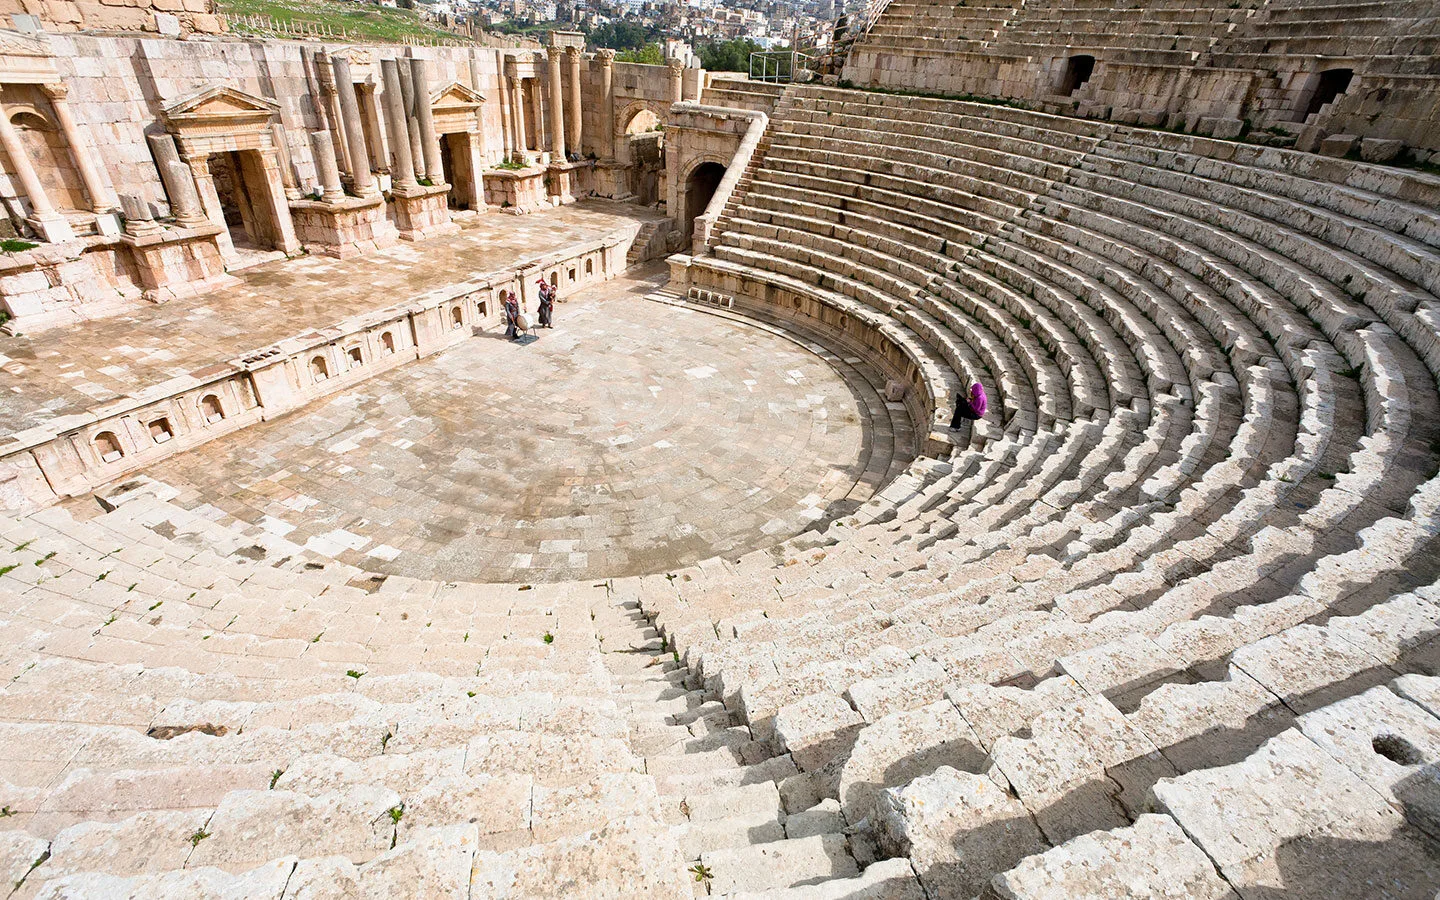 The South Theatre at Jerash Roman city in Jordan